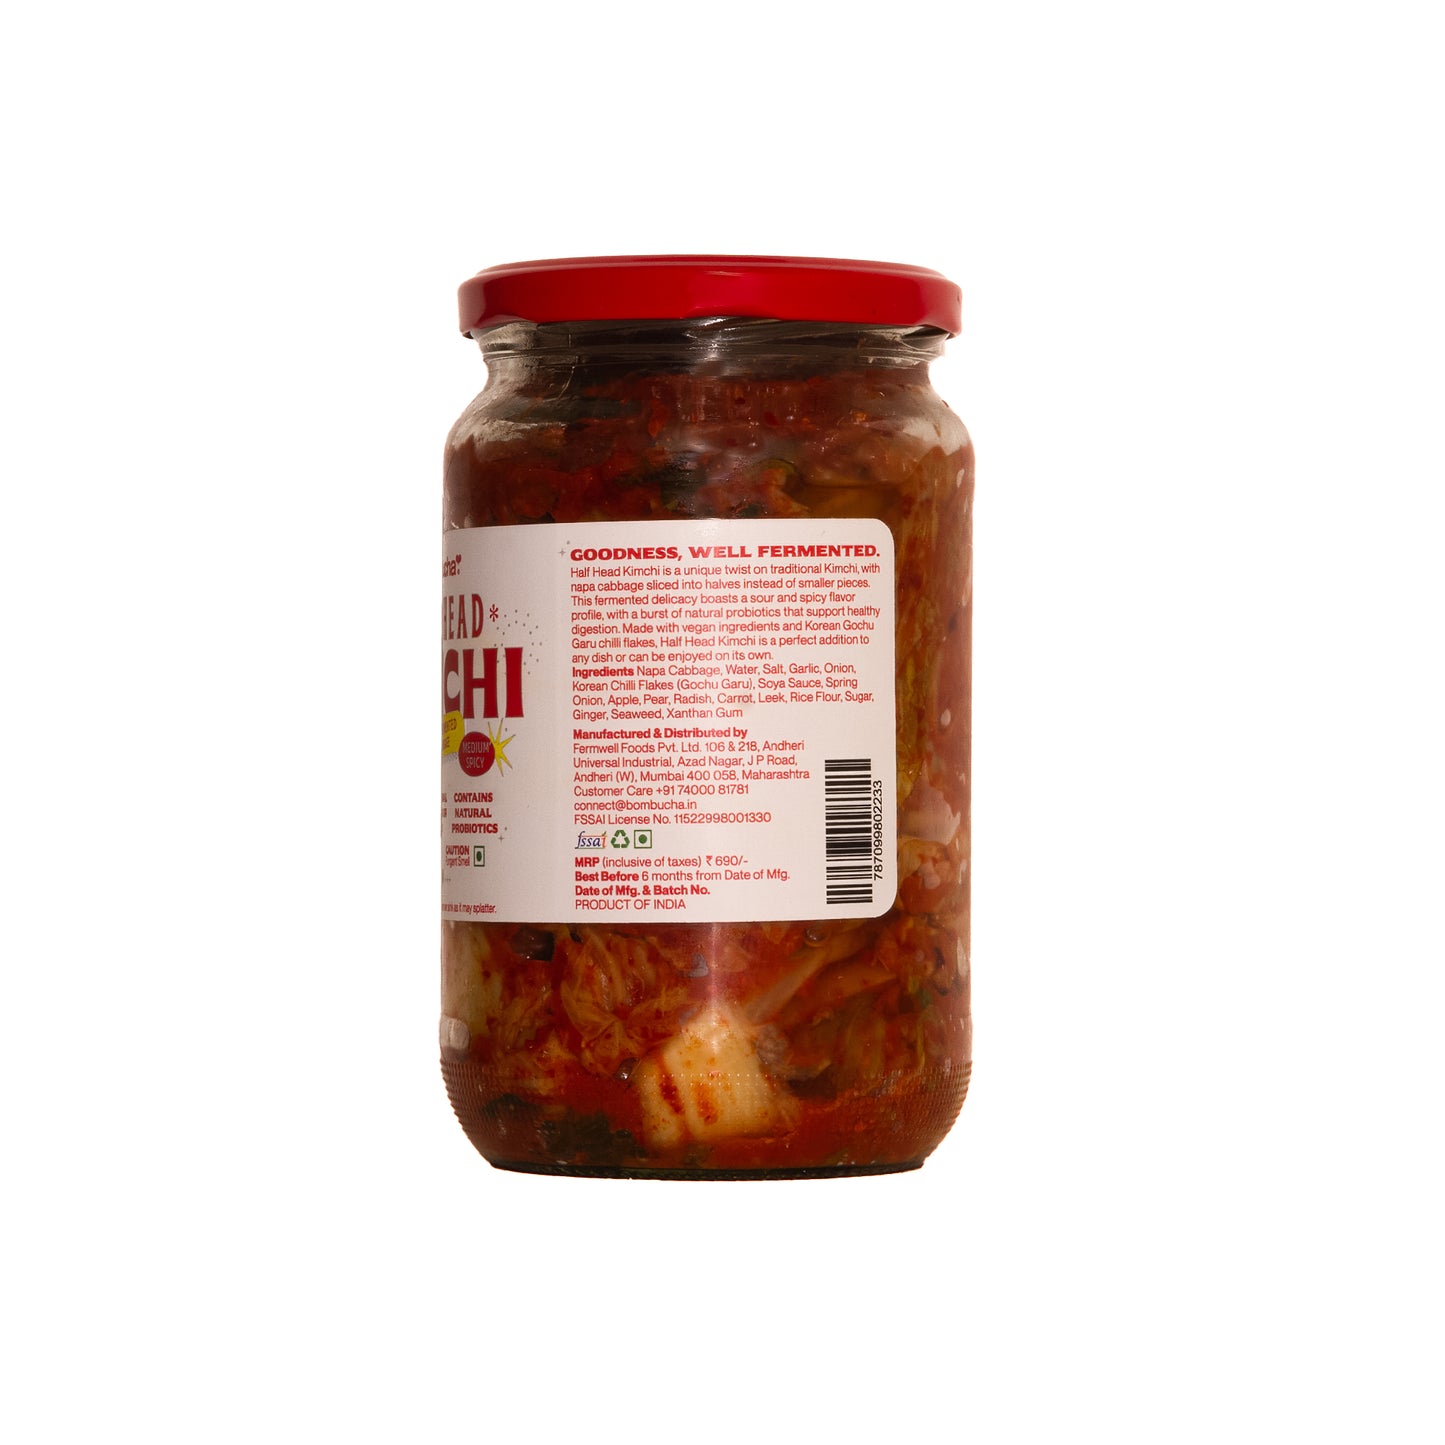 Half Head Kimchi 700gm (BLR)